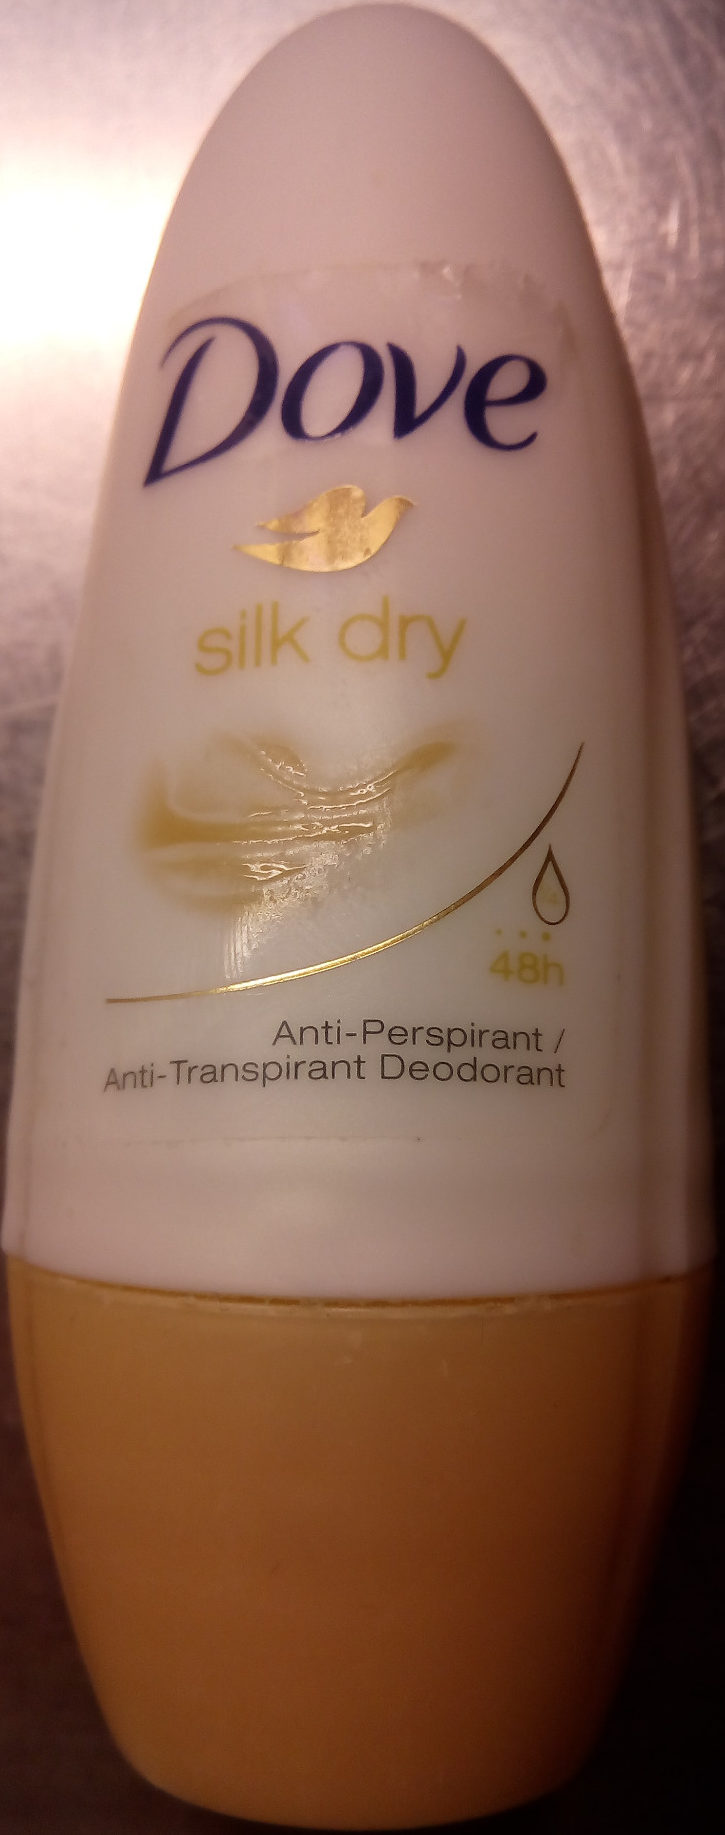 Dove silk dry 24h - מוצר - en